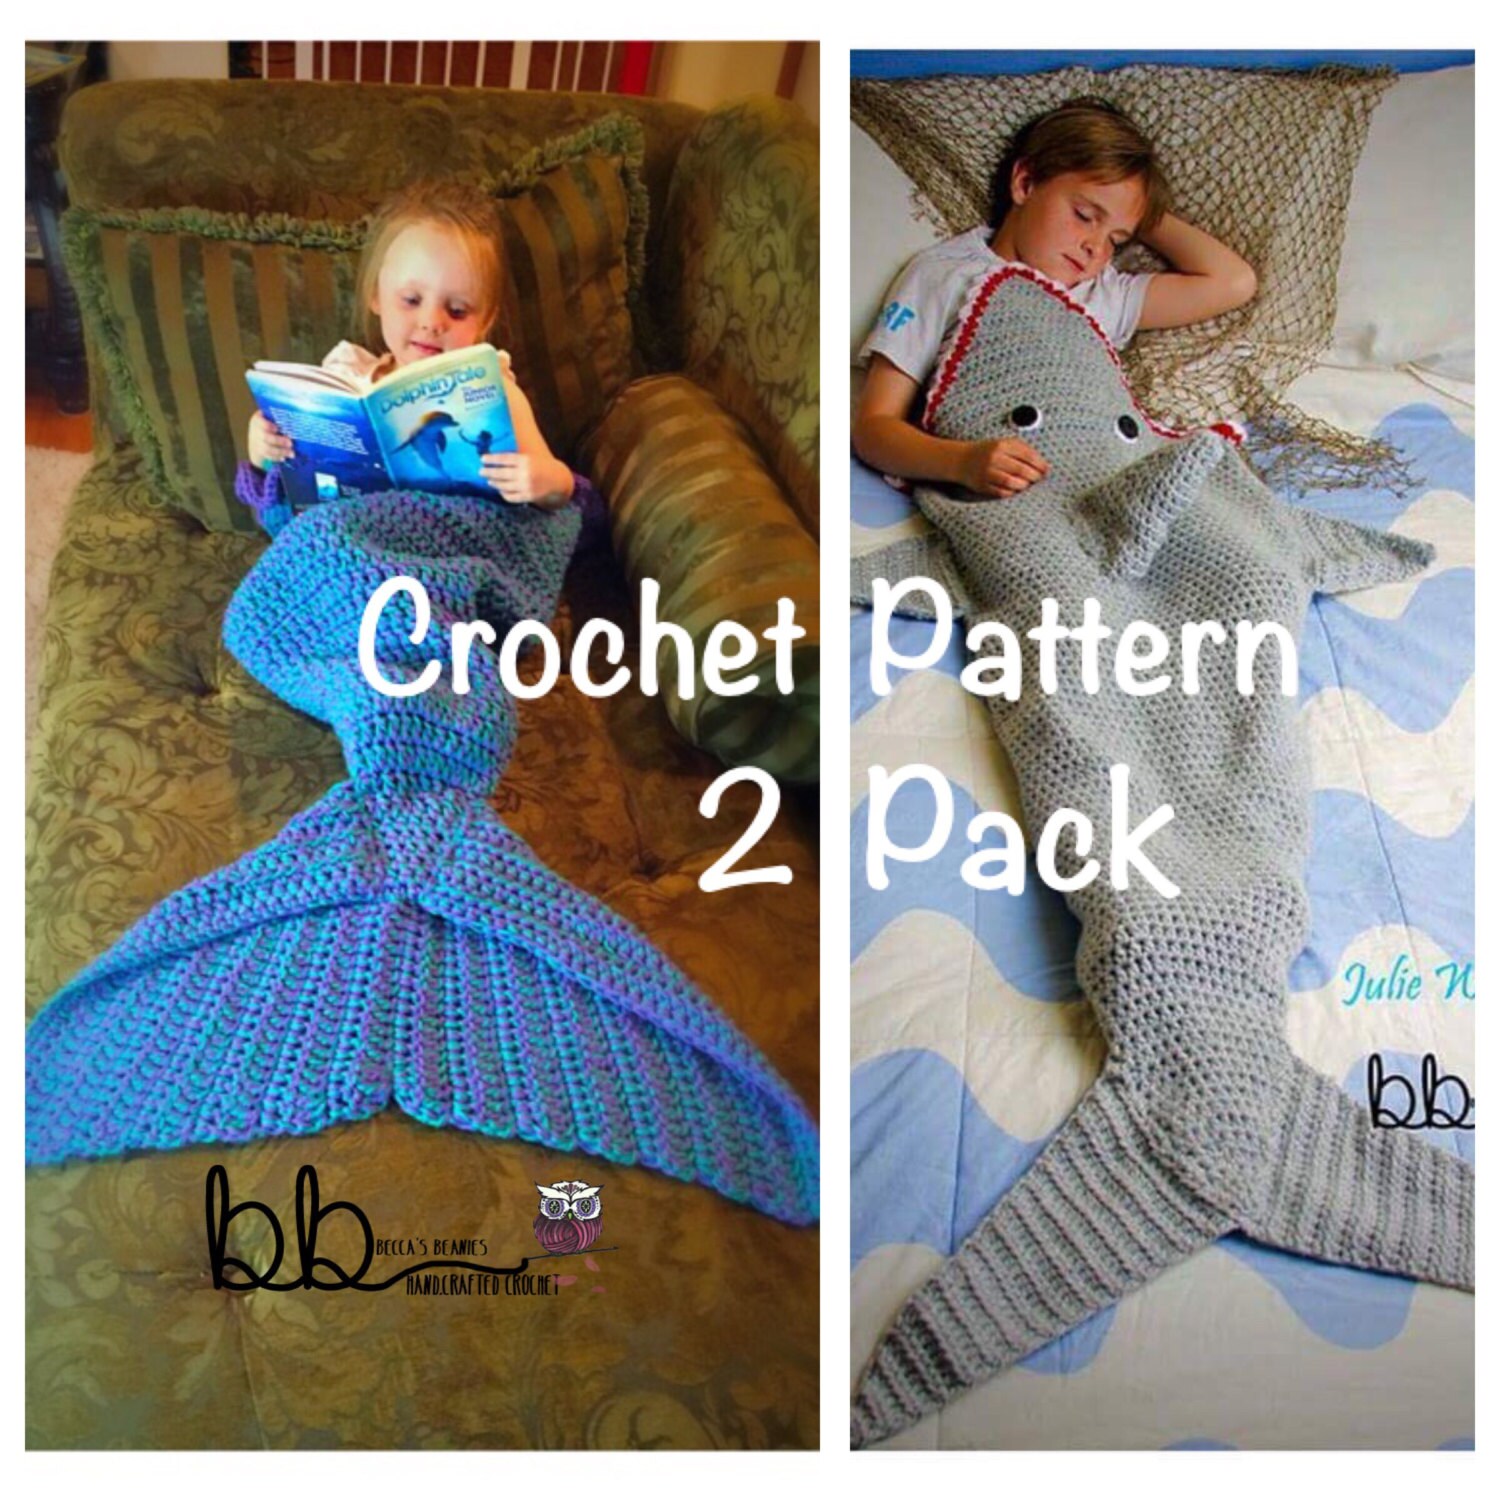 Shark Hooded Blanket Crochet Pattern PATTERN ONLY One Size Fits Most 